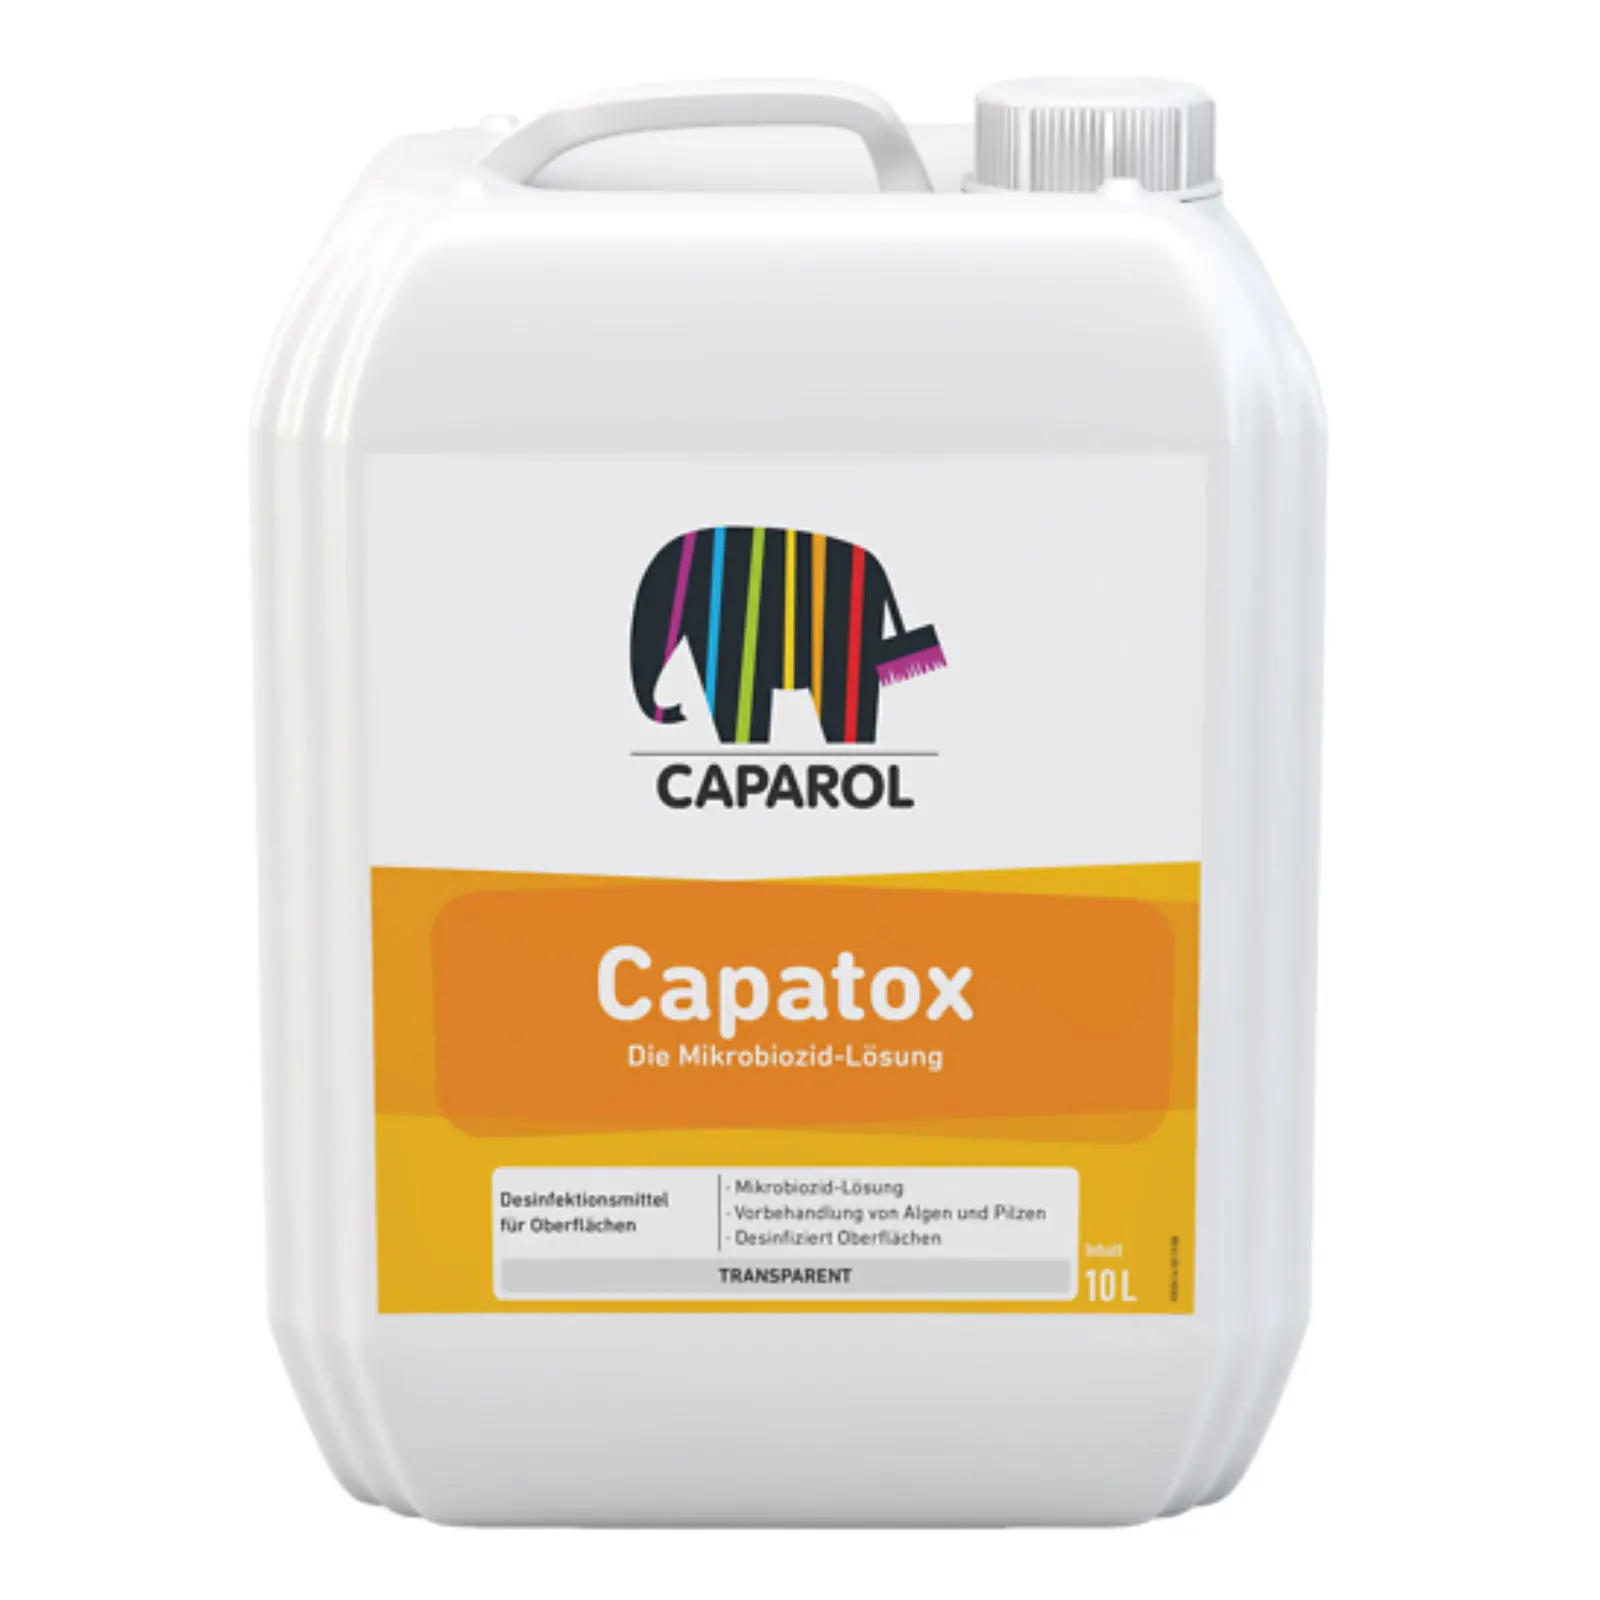 CAPAROL Capatox wässrige Mikrobiozid-Lösung Pilze Schimmel Algen